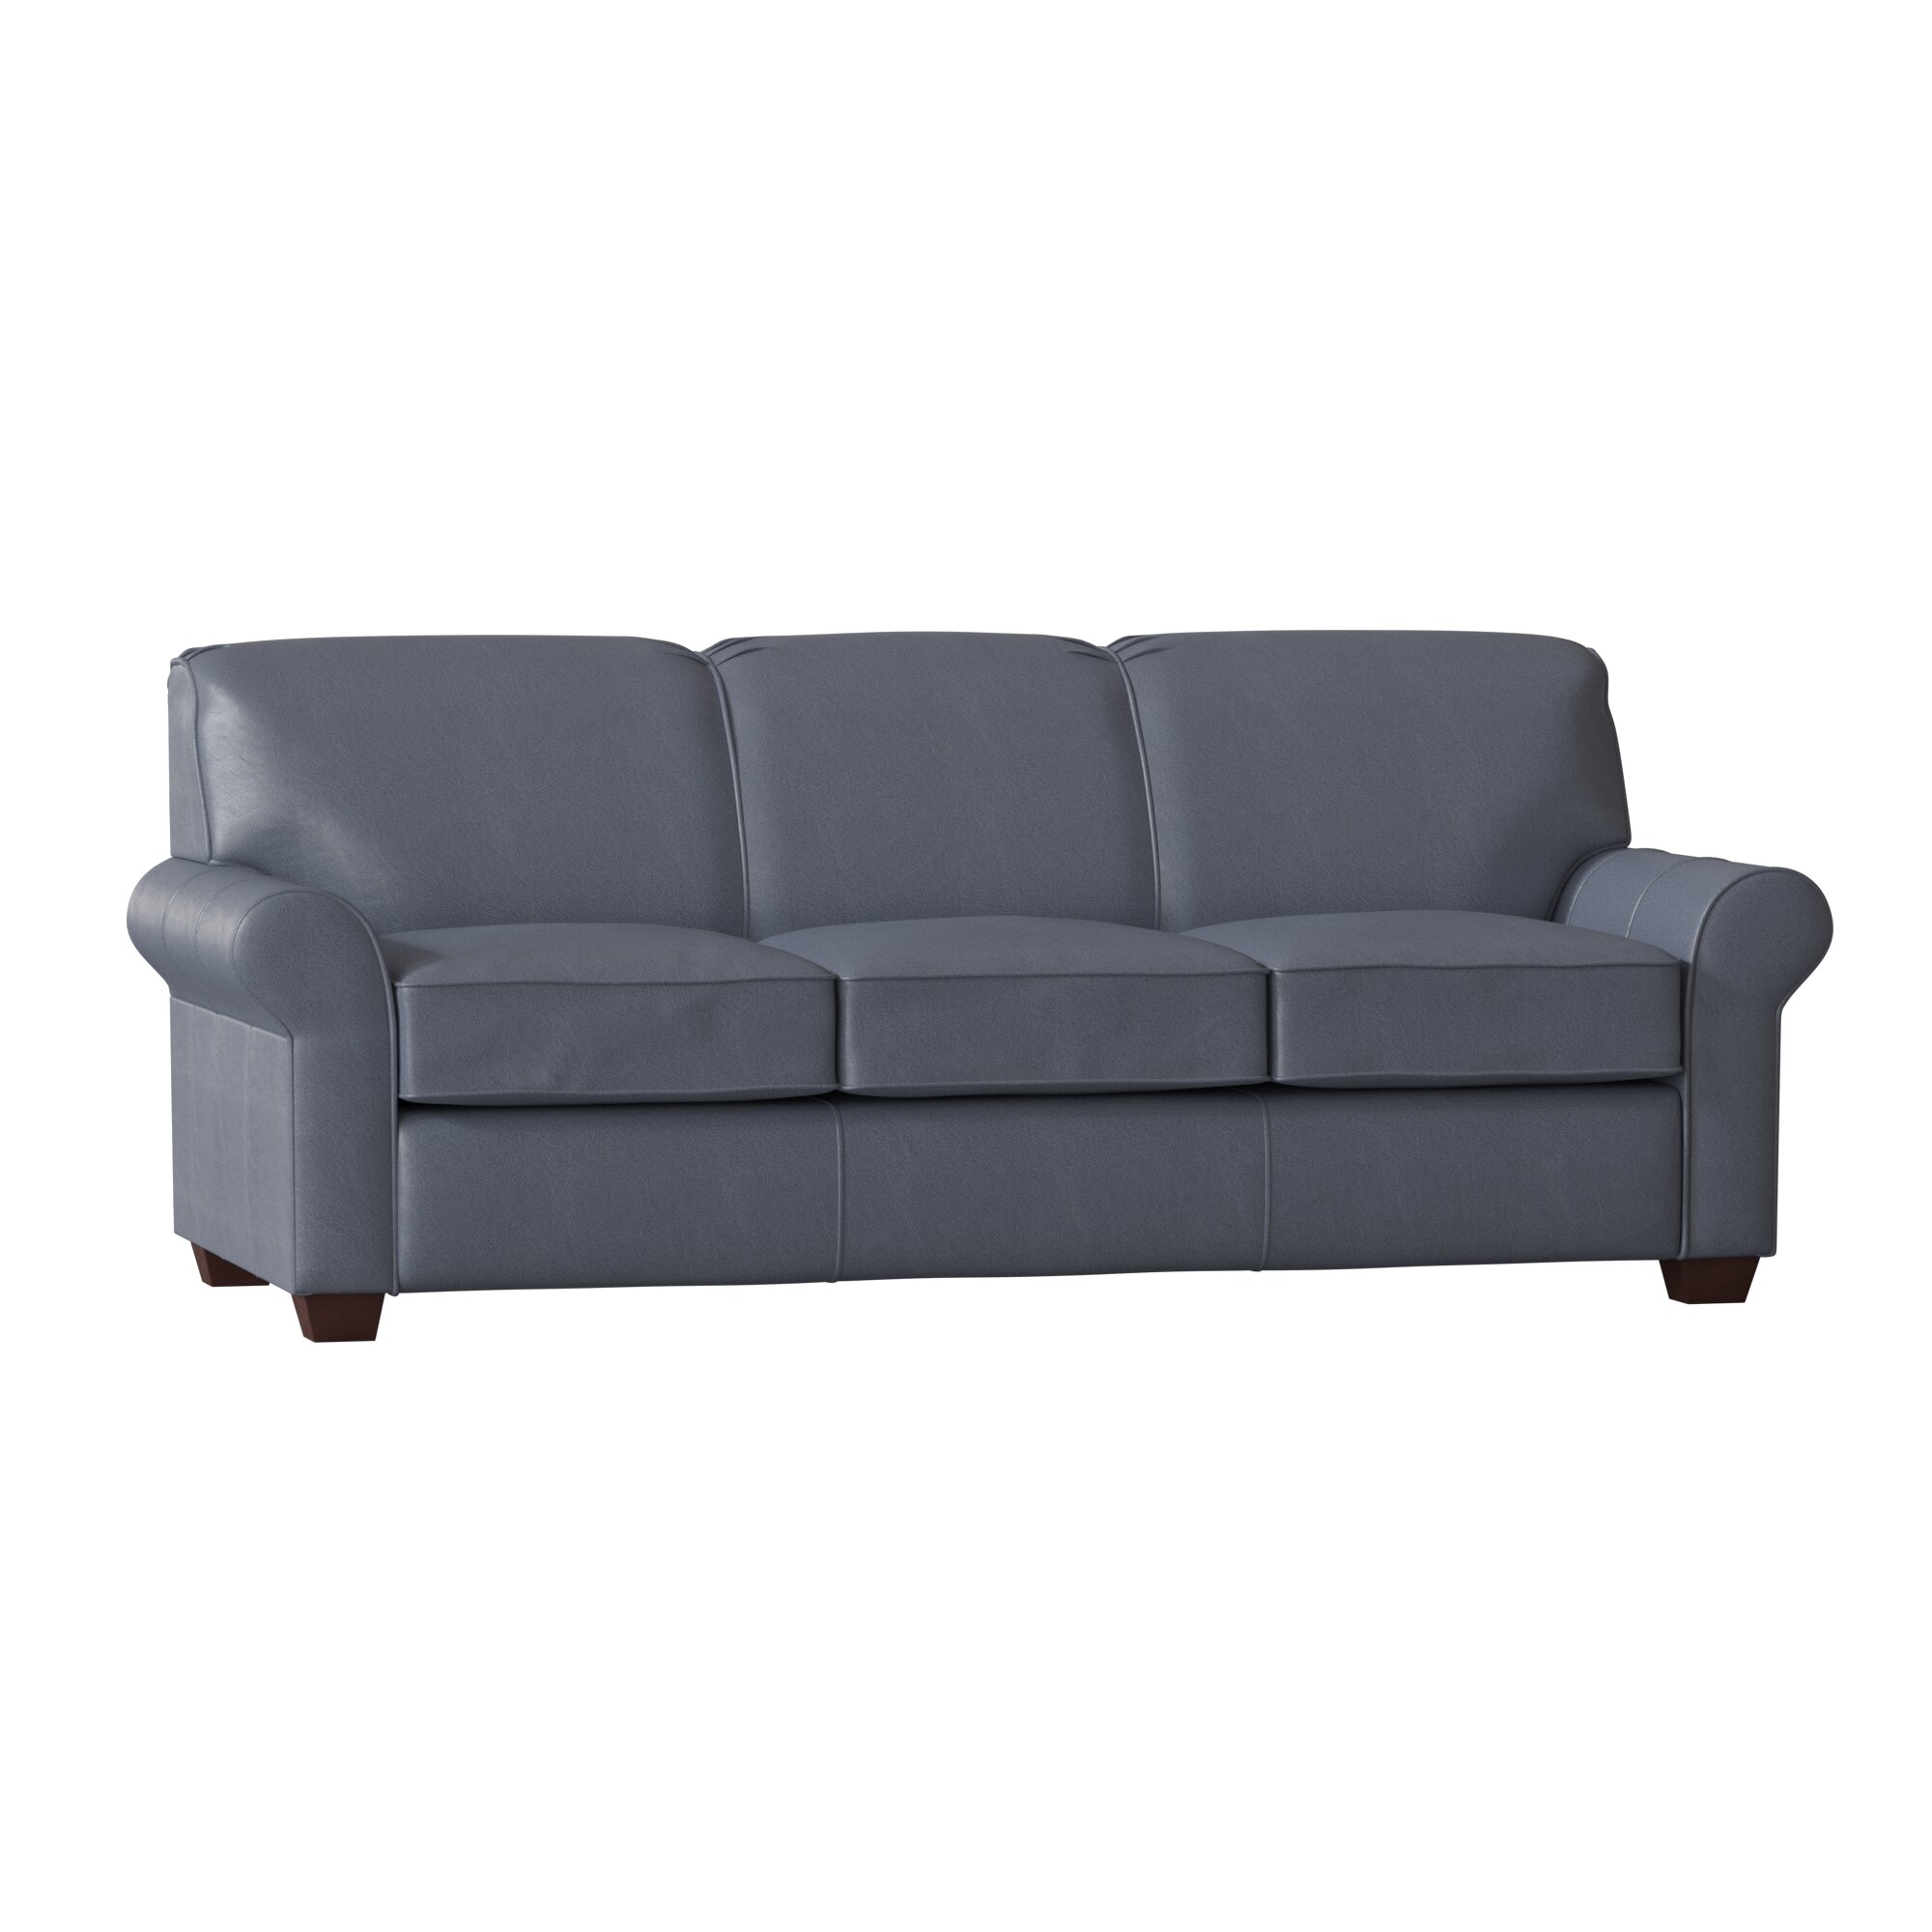 Wayfair Custom Upholstery Jennifer Leather 81 Rolled Arms Sofa